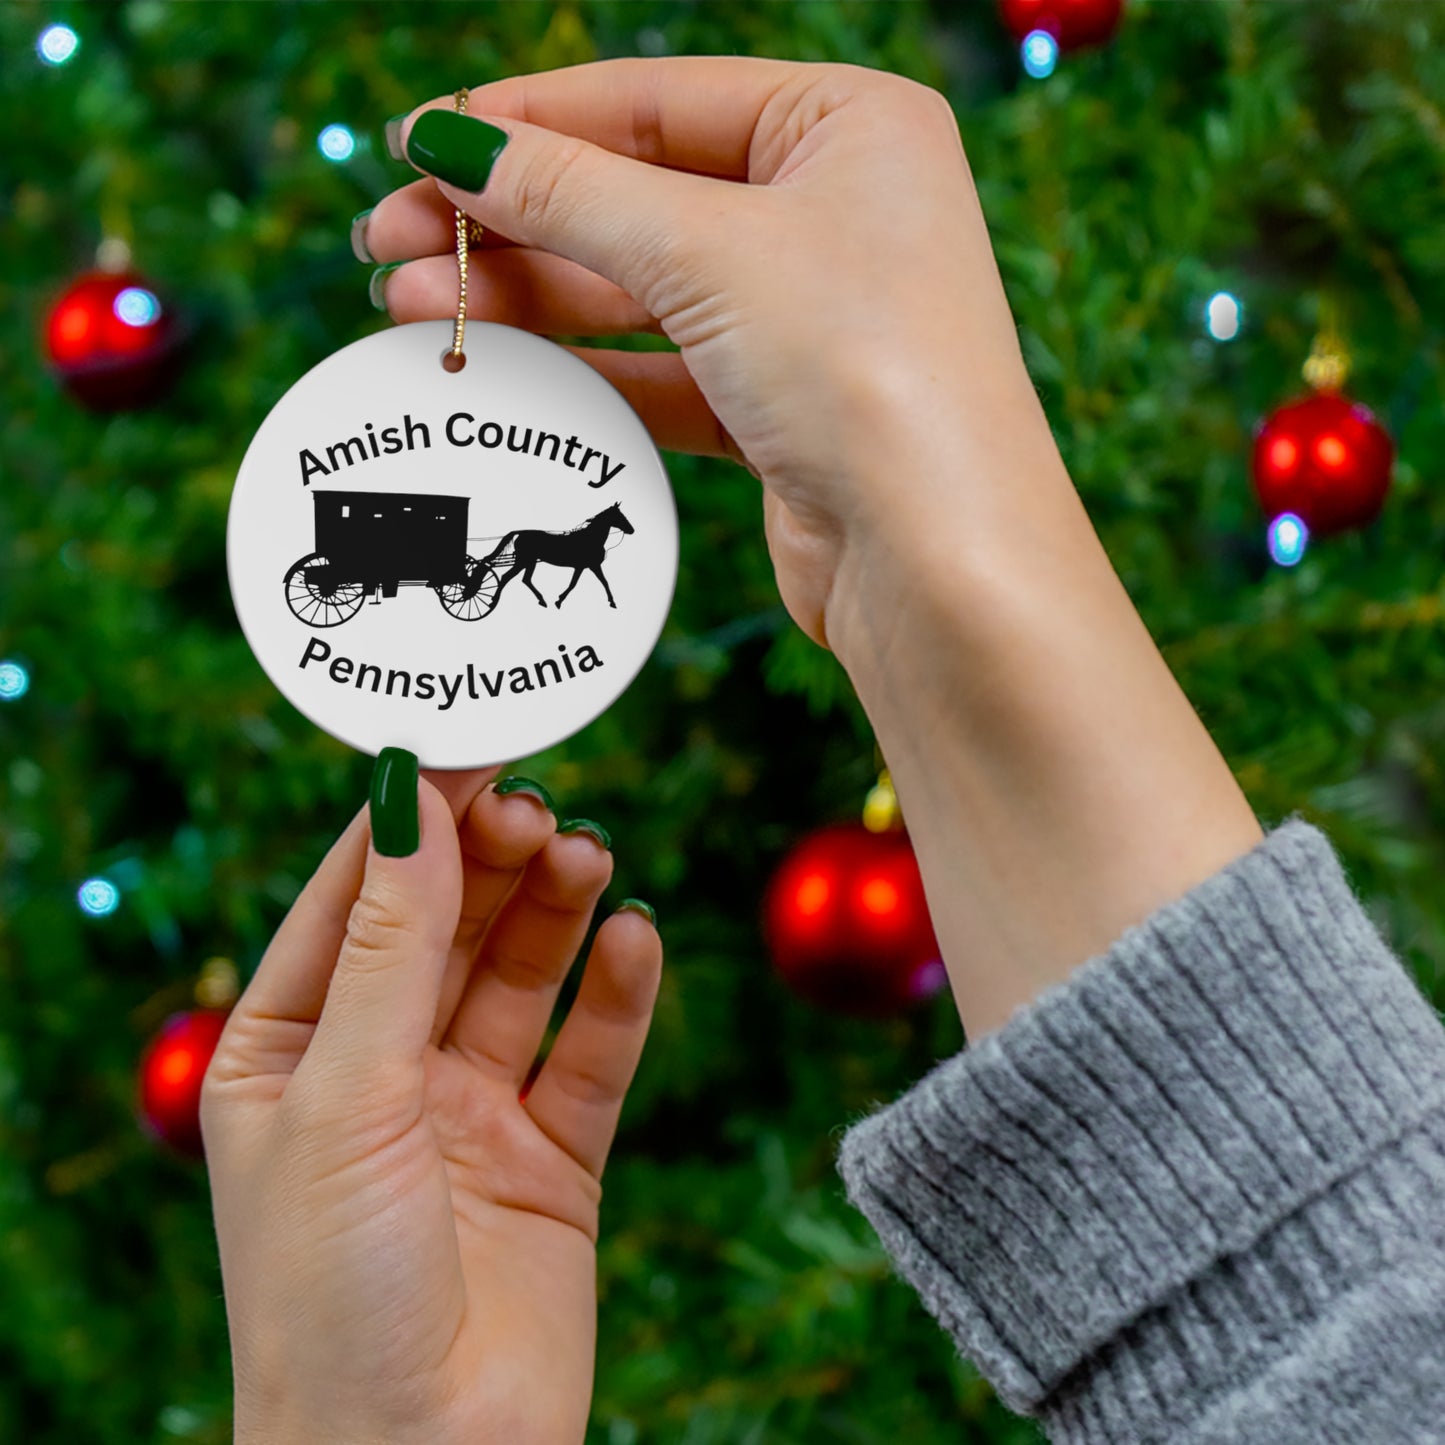 Amish Christmas Ornaments - Travel Christmas Tree Ornaments From Amish Country, Amish Buggy Ornament, Ceramic Ornaments